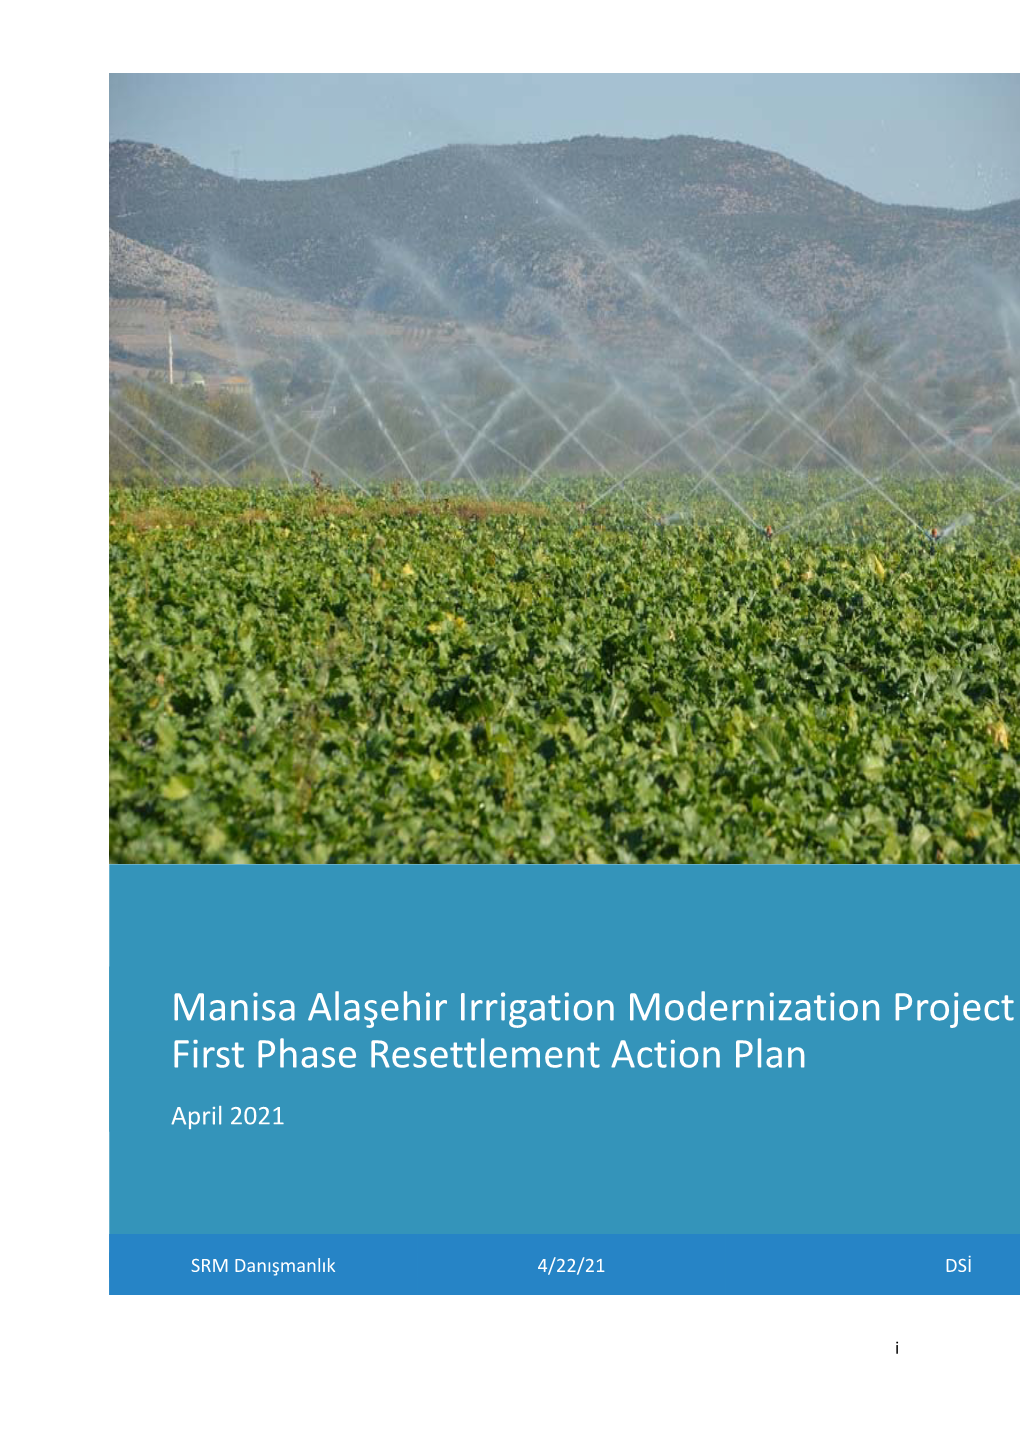 Manisa Alaşehir Irrigation Modernization Project First Phase Resettlement Action Plan April 2021